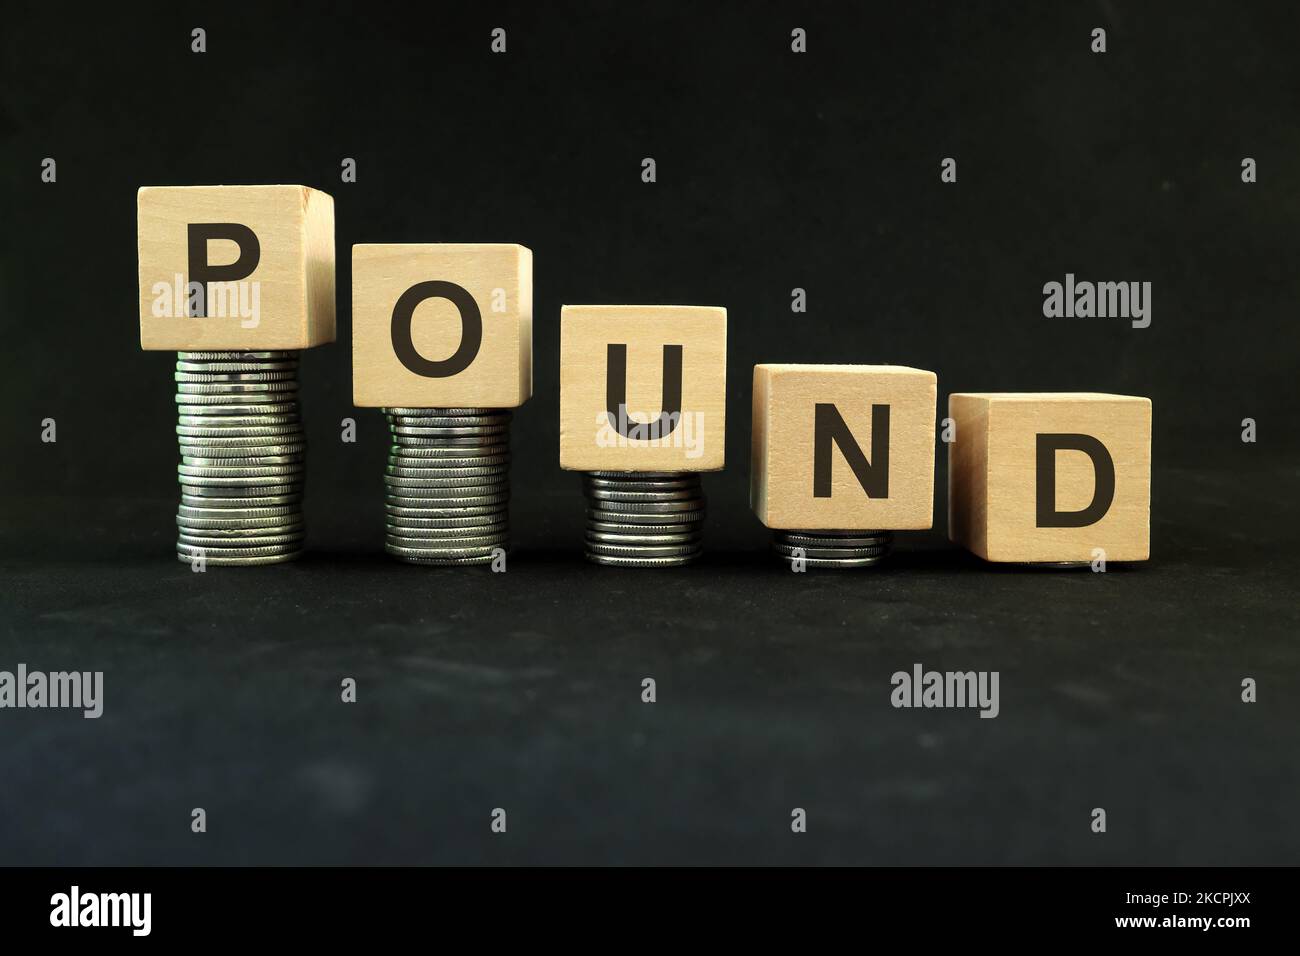 British pound currency weakening, value depreciation and devaluation concept. Decreasing stack of coins on dark black background. Stock Photo